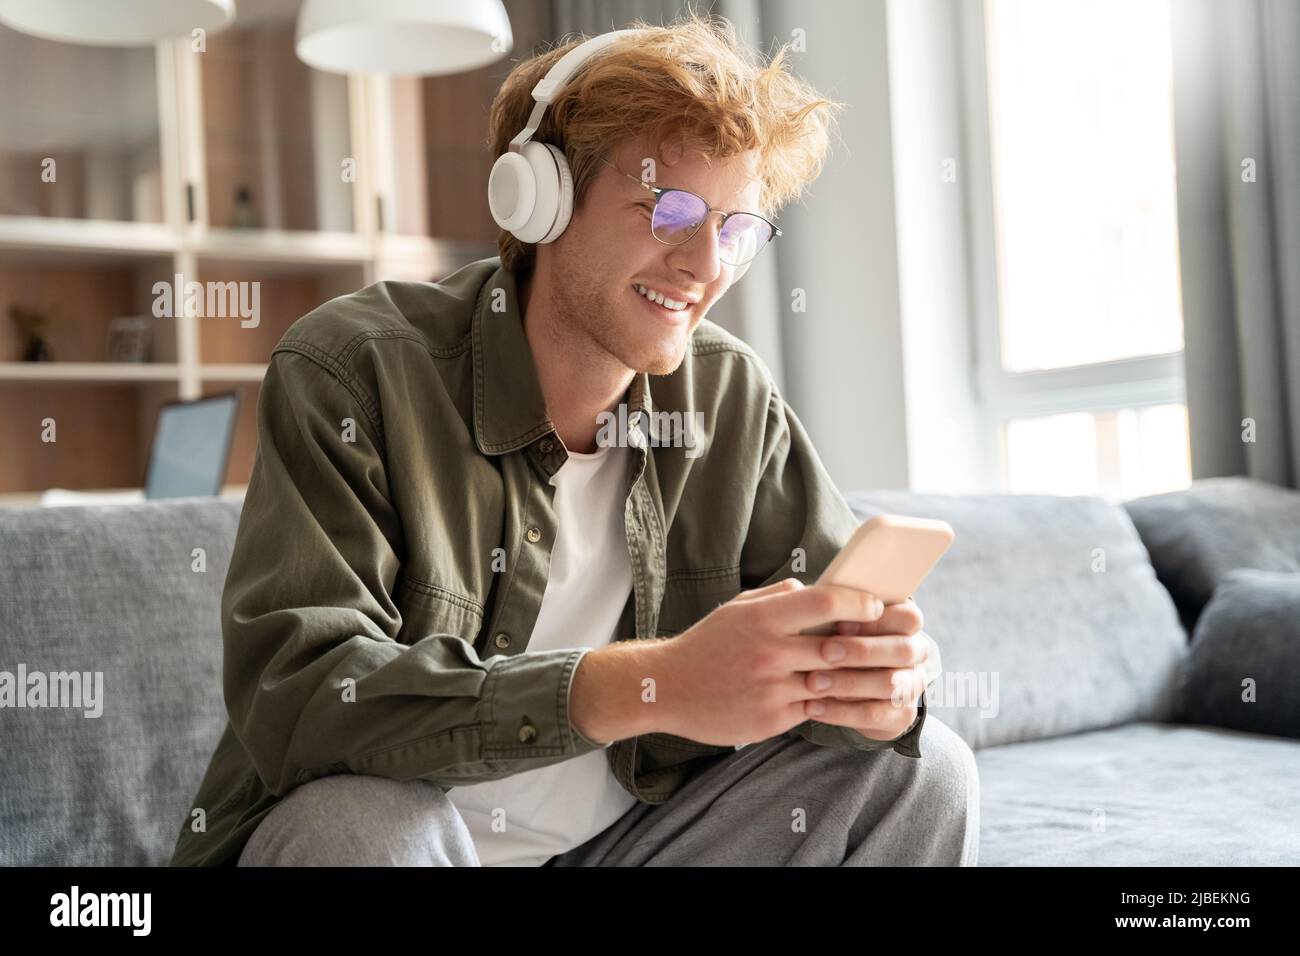 Young irish ginger man in headphone doing video call using smartphone Stock Photo